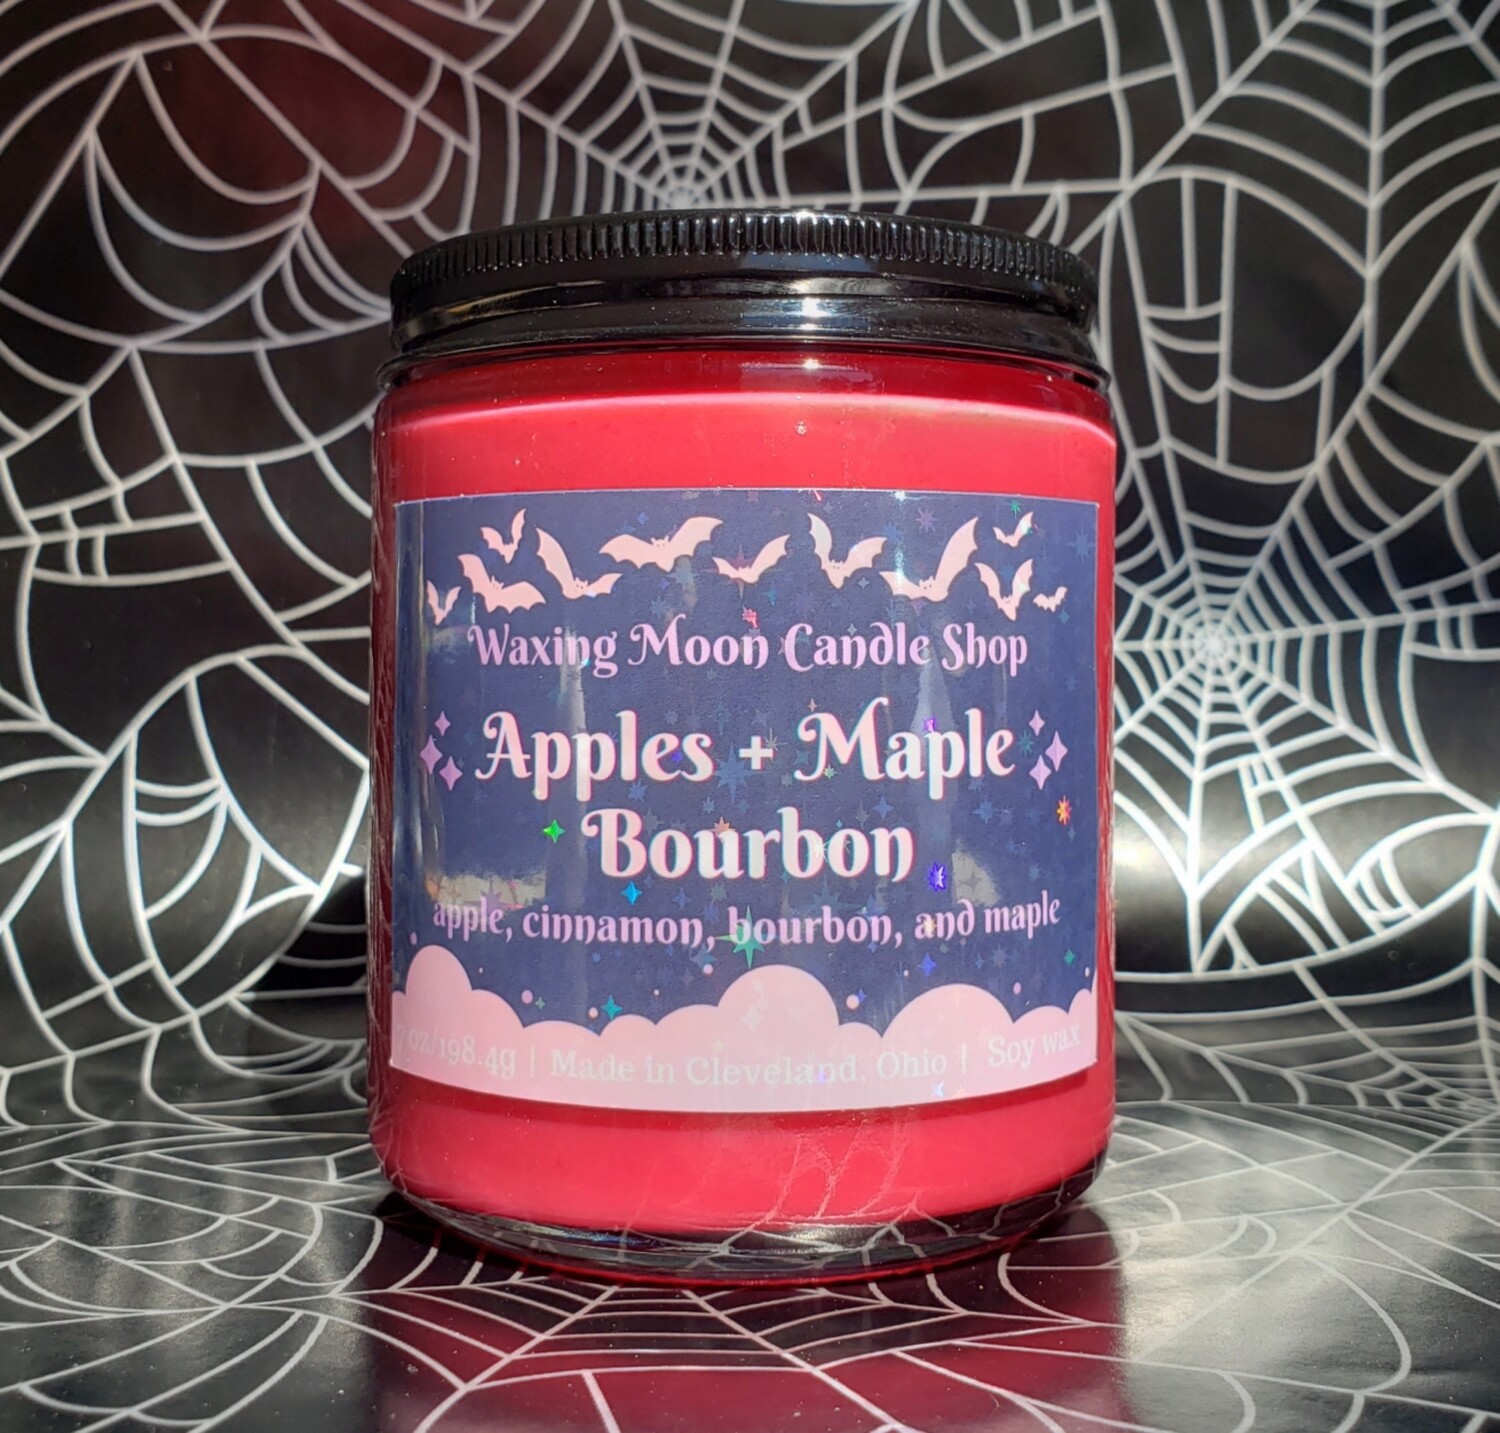 Apples + Maple Bourbon 7oz container candle